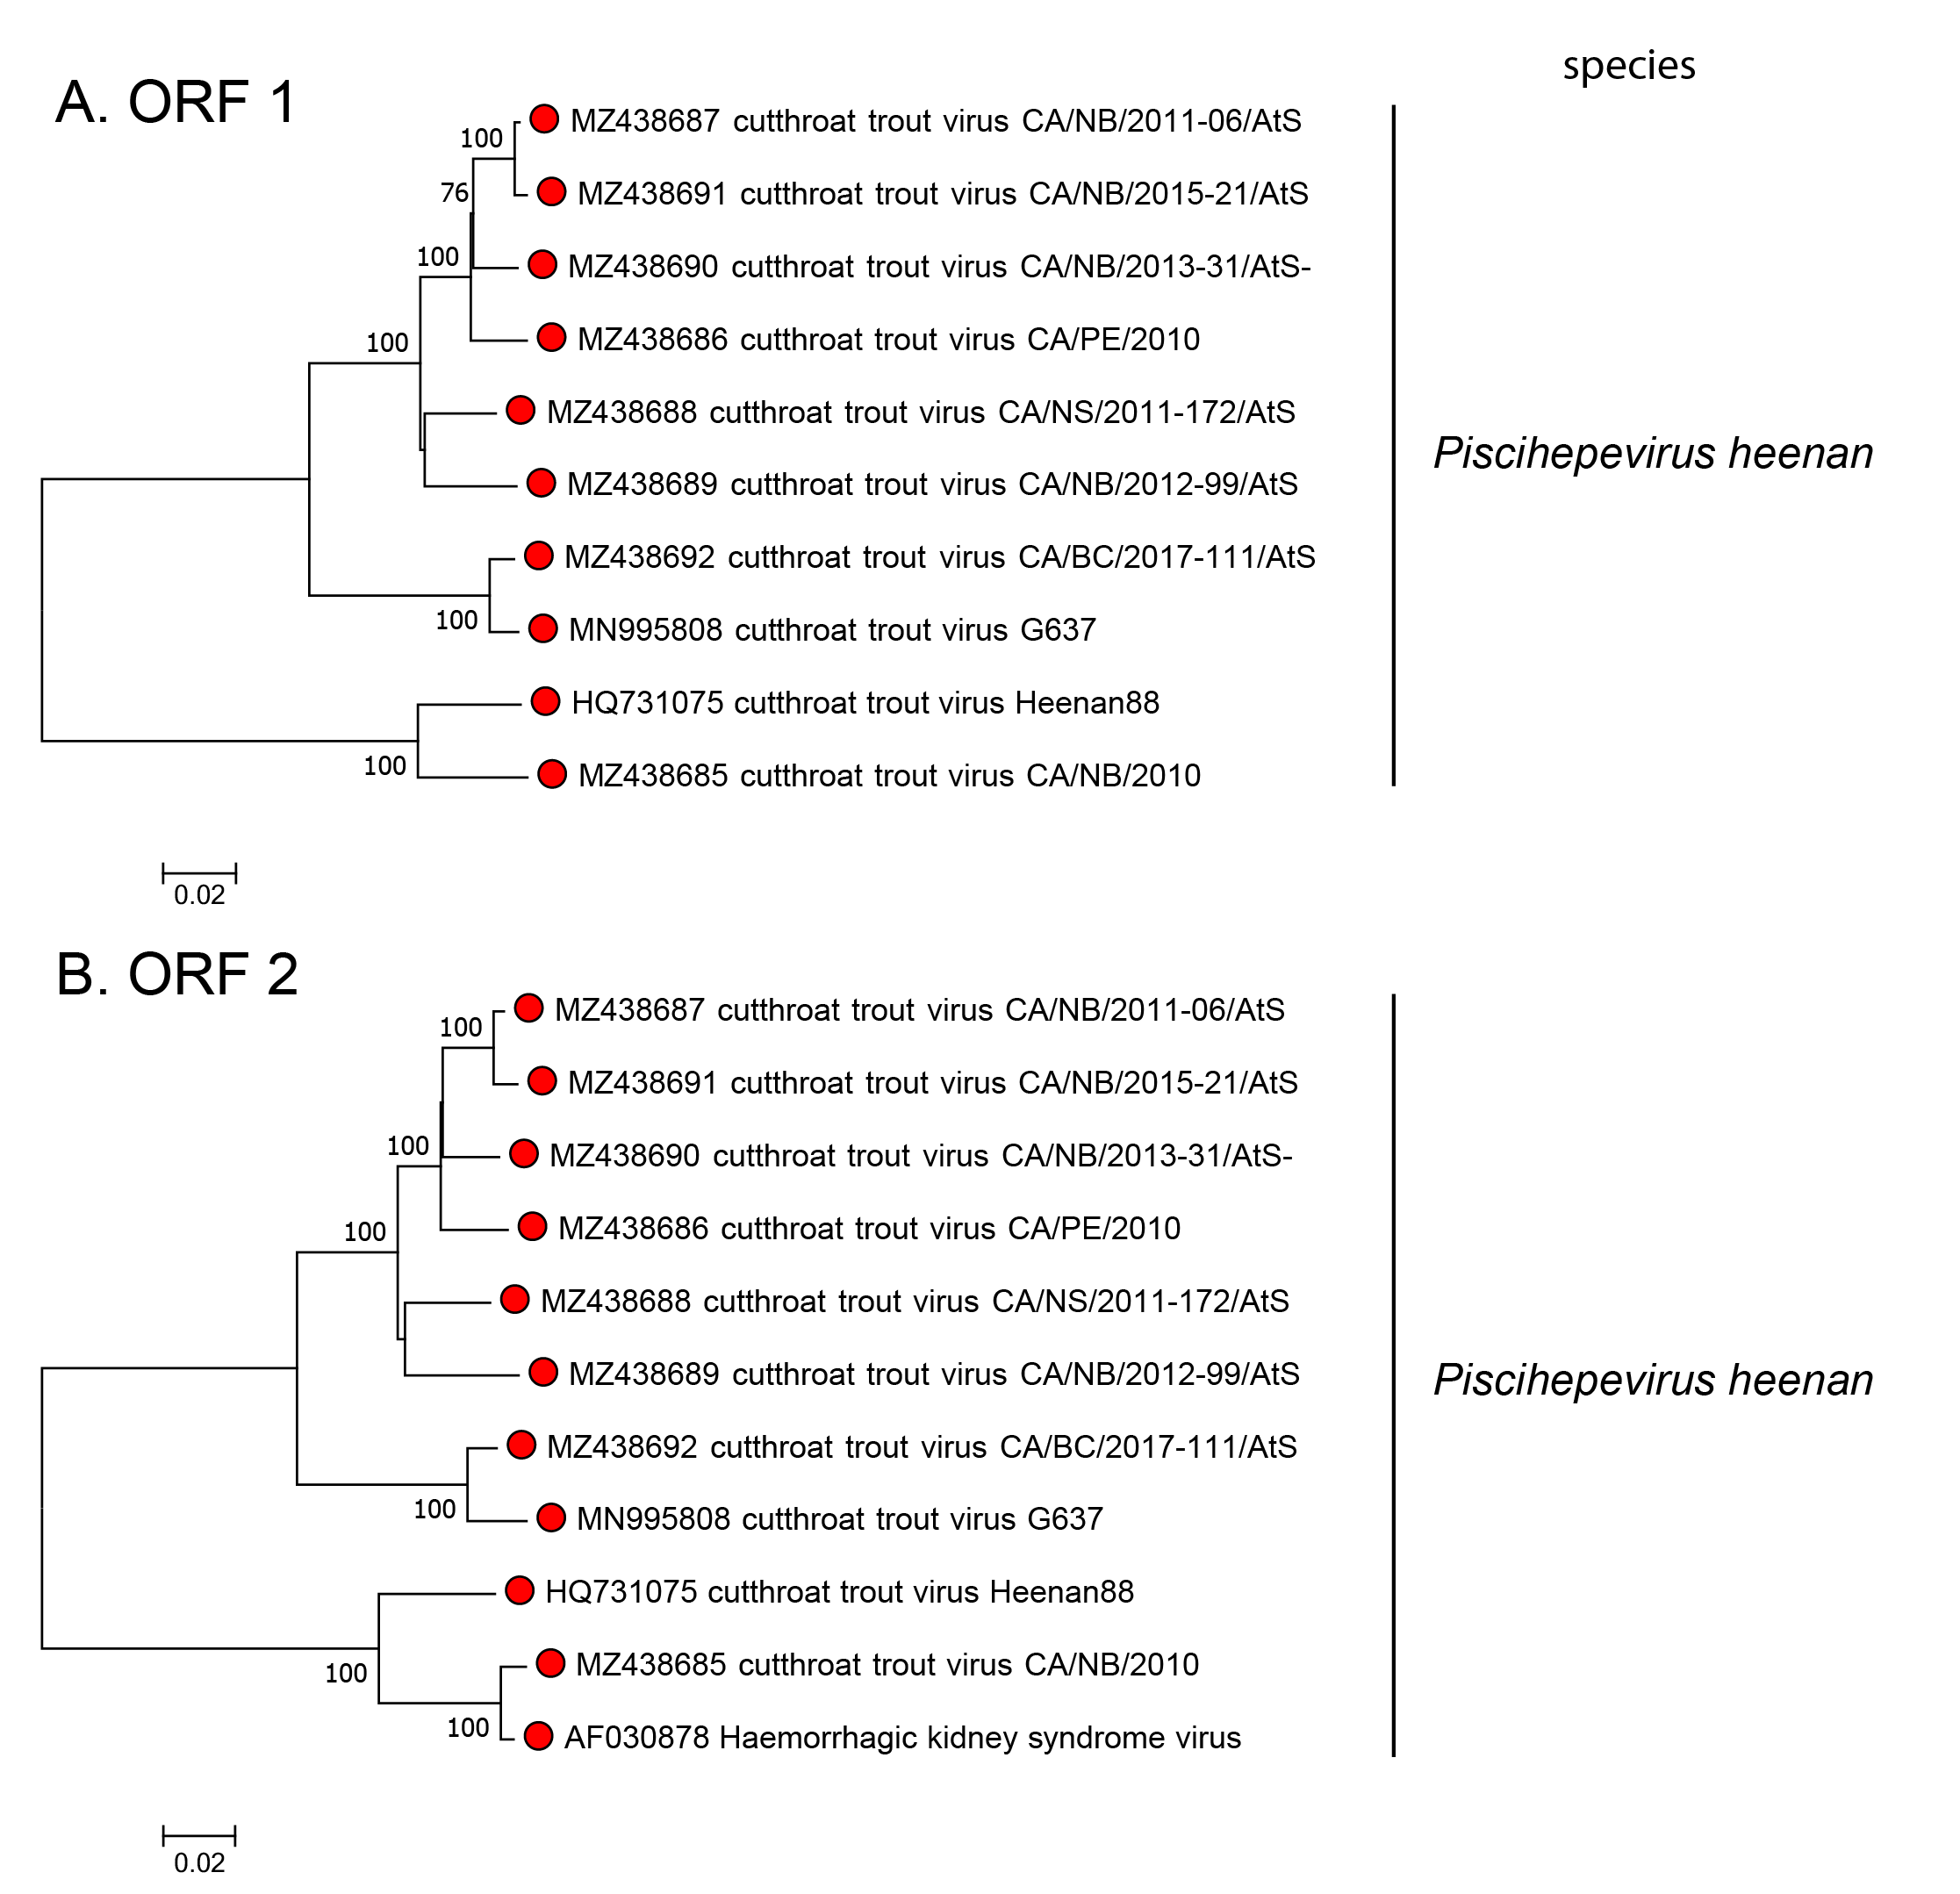 Phylogenetic tree of genus Piscihepevirus